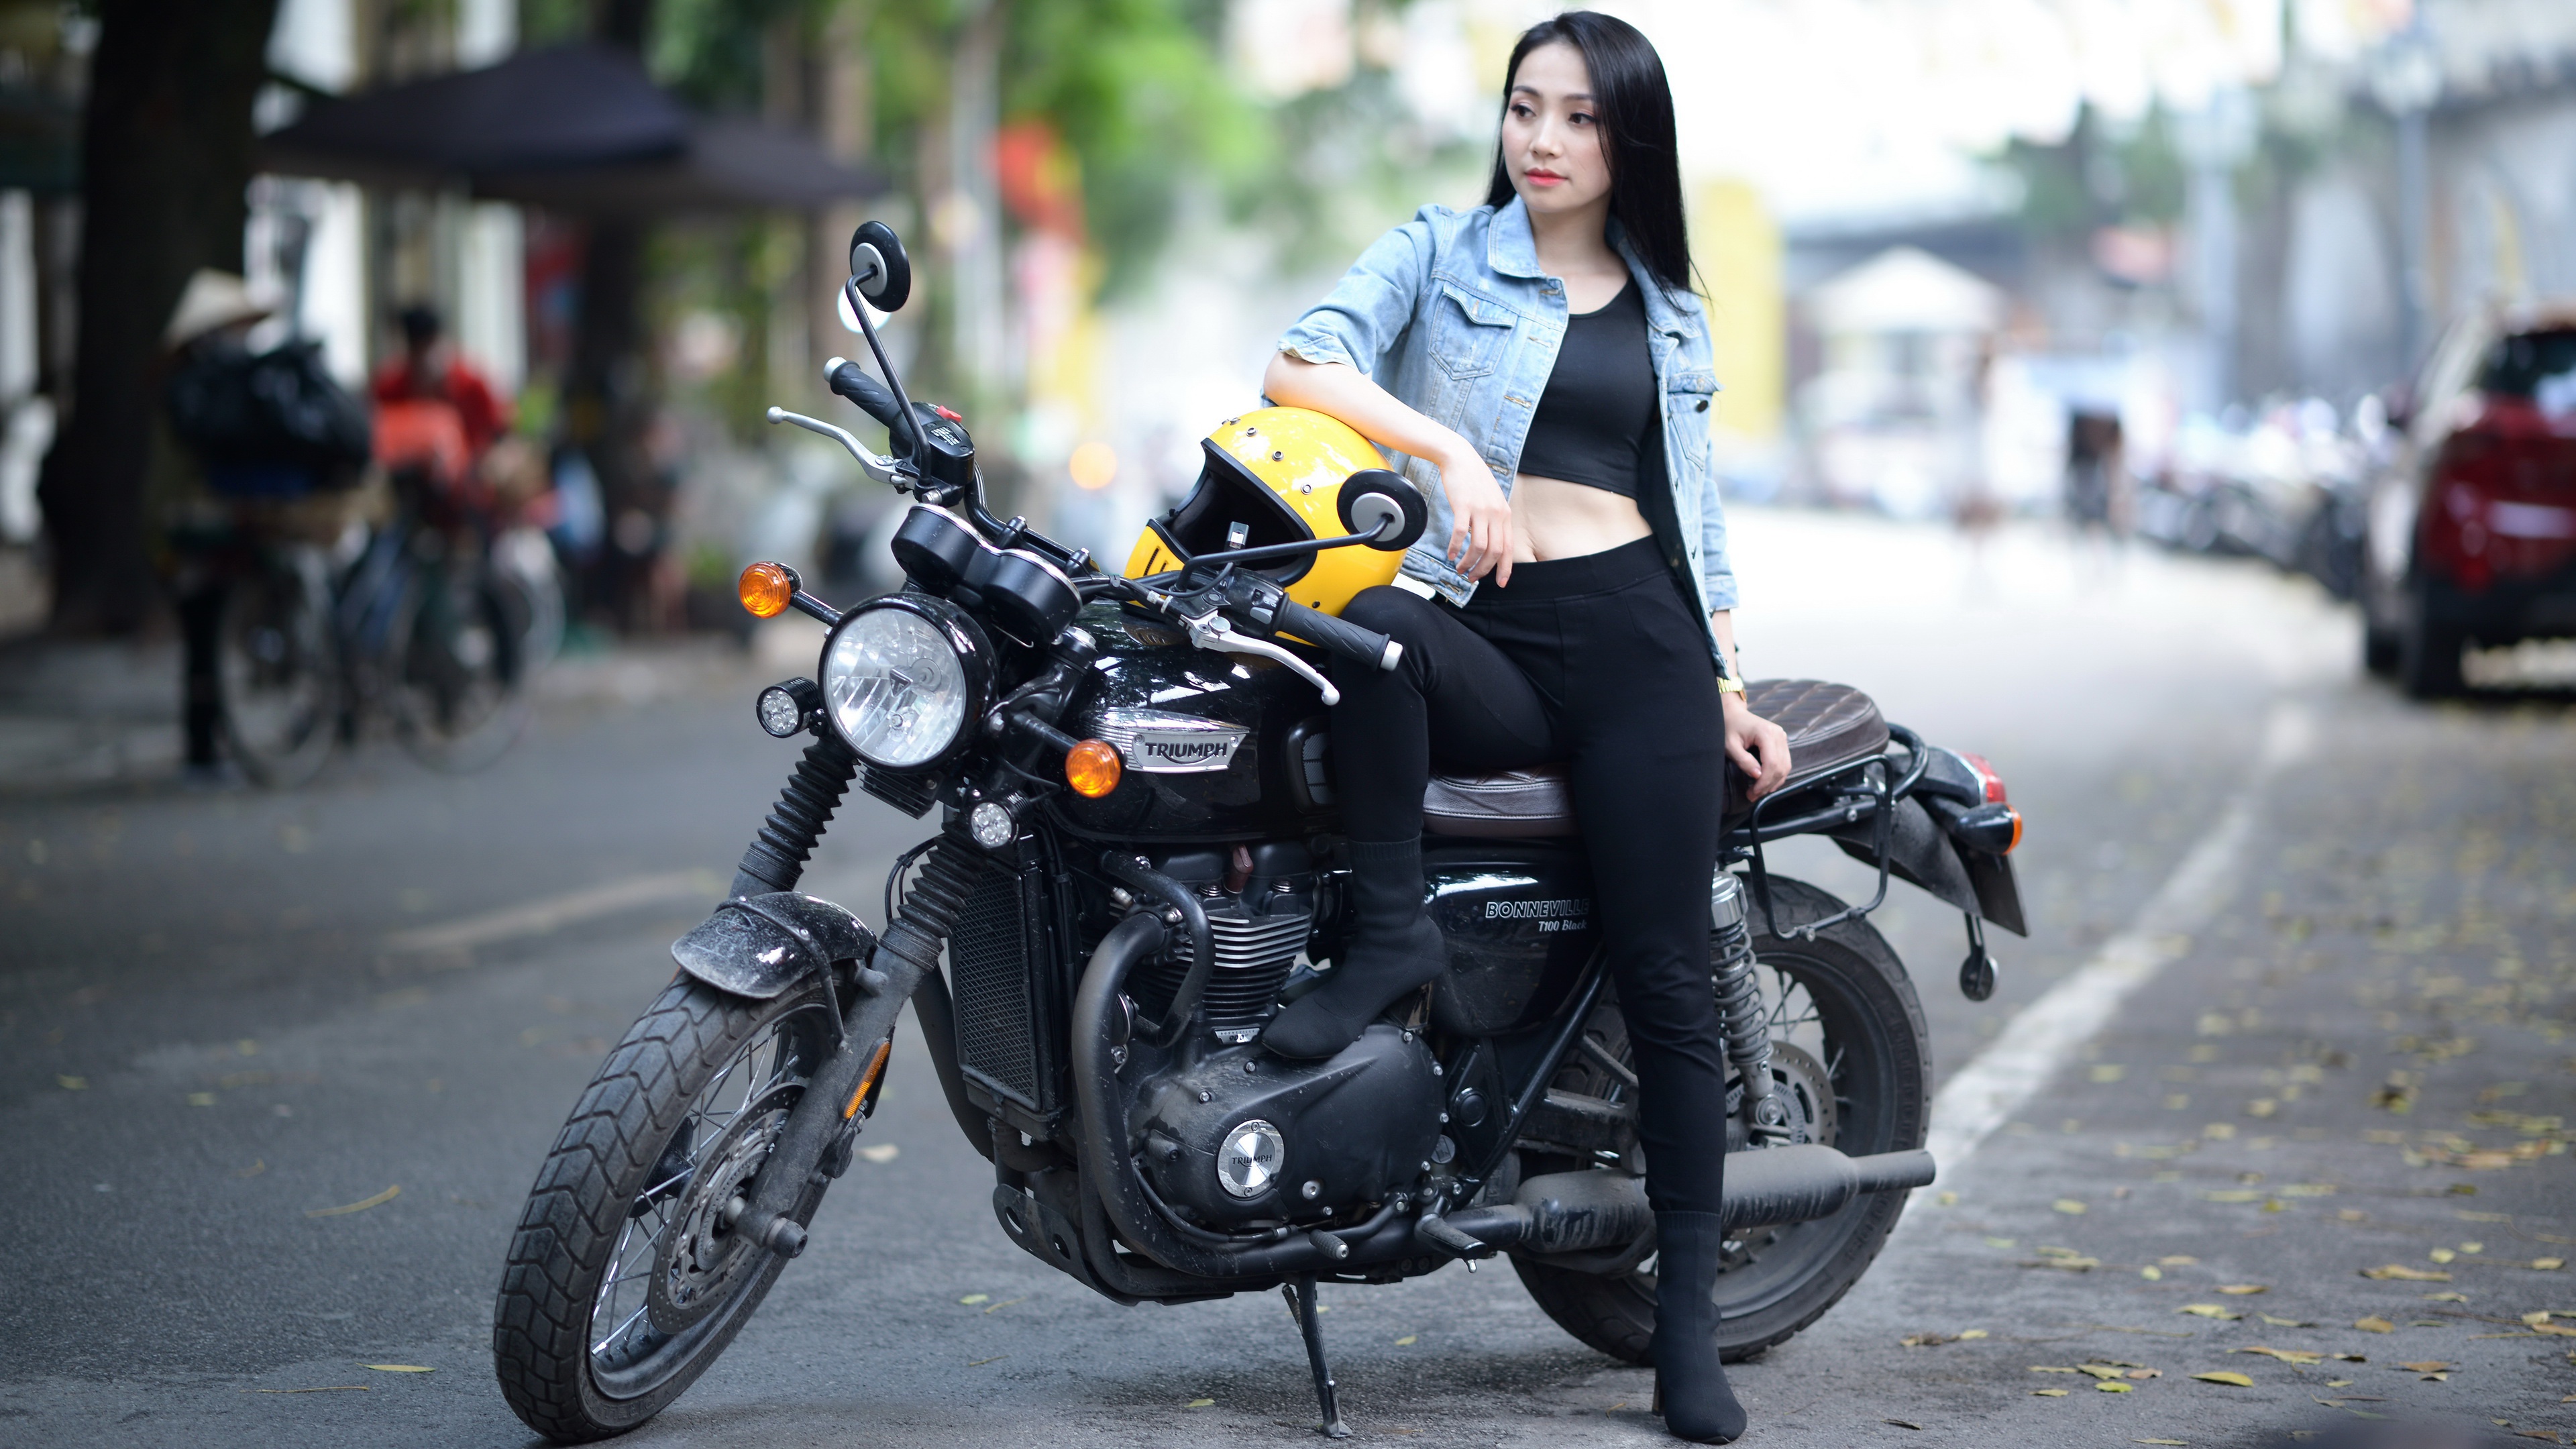 People 3840x2160 Asian model women motorcycle urban women with motorcycles dark hair vehicle looking away Triumph British motorcycles